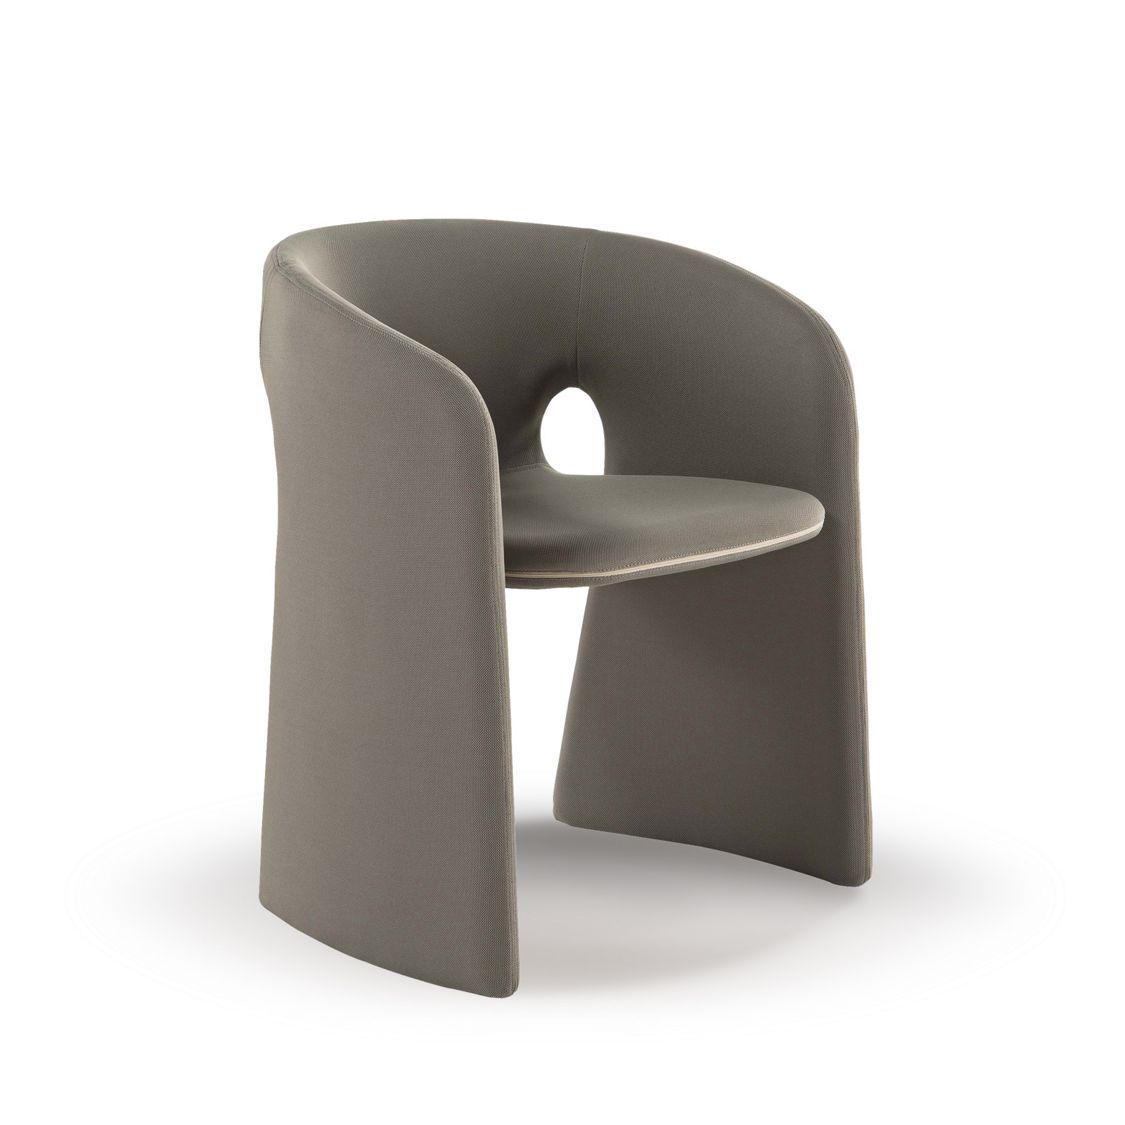 designer dupe, geometric chair